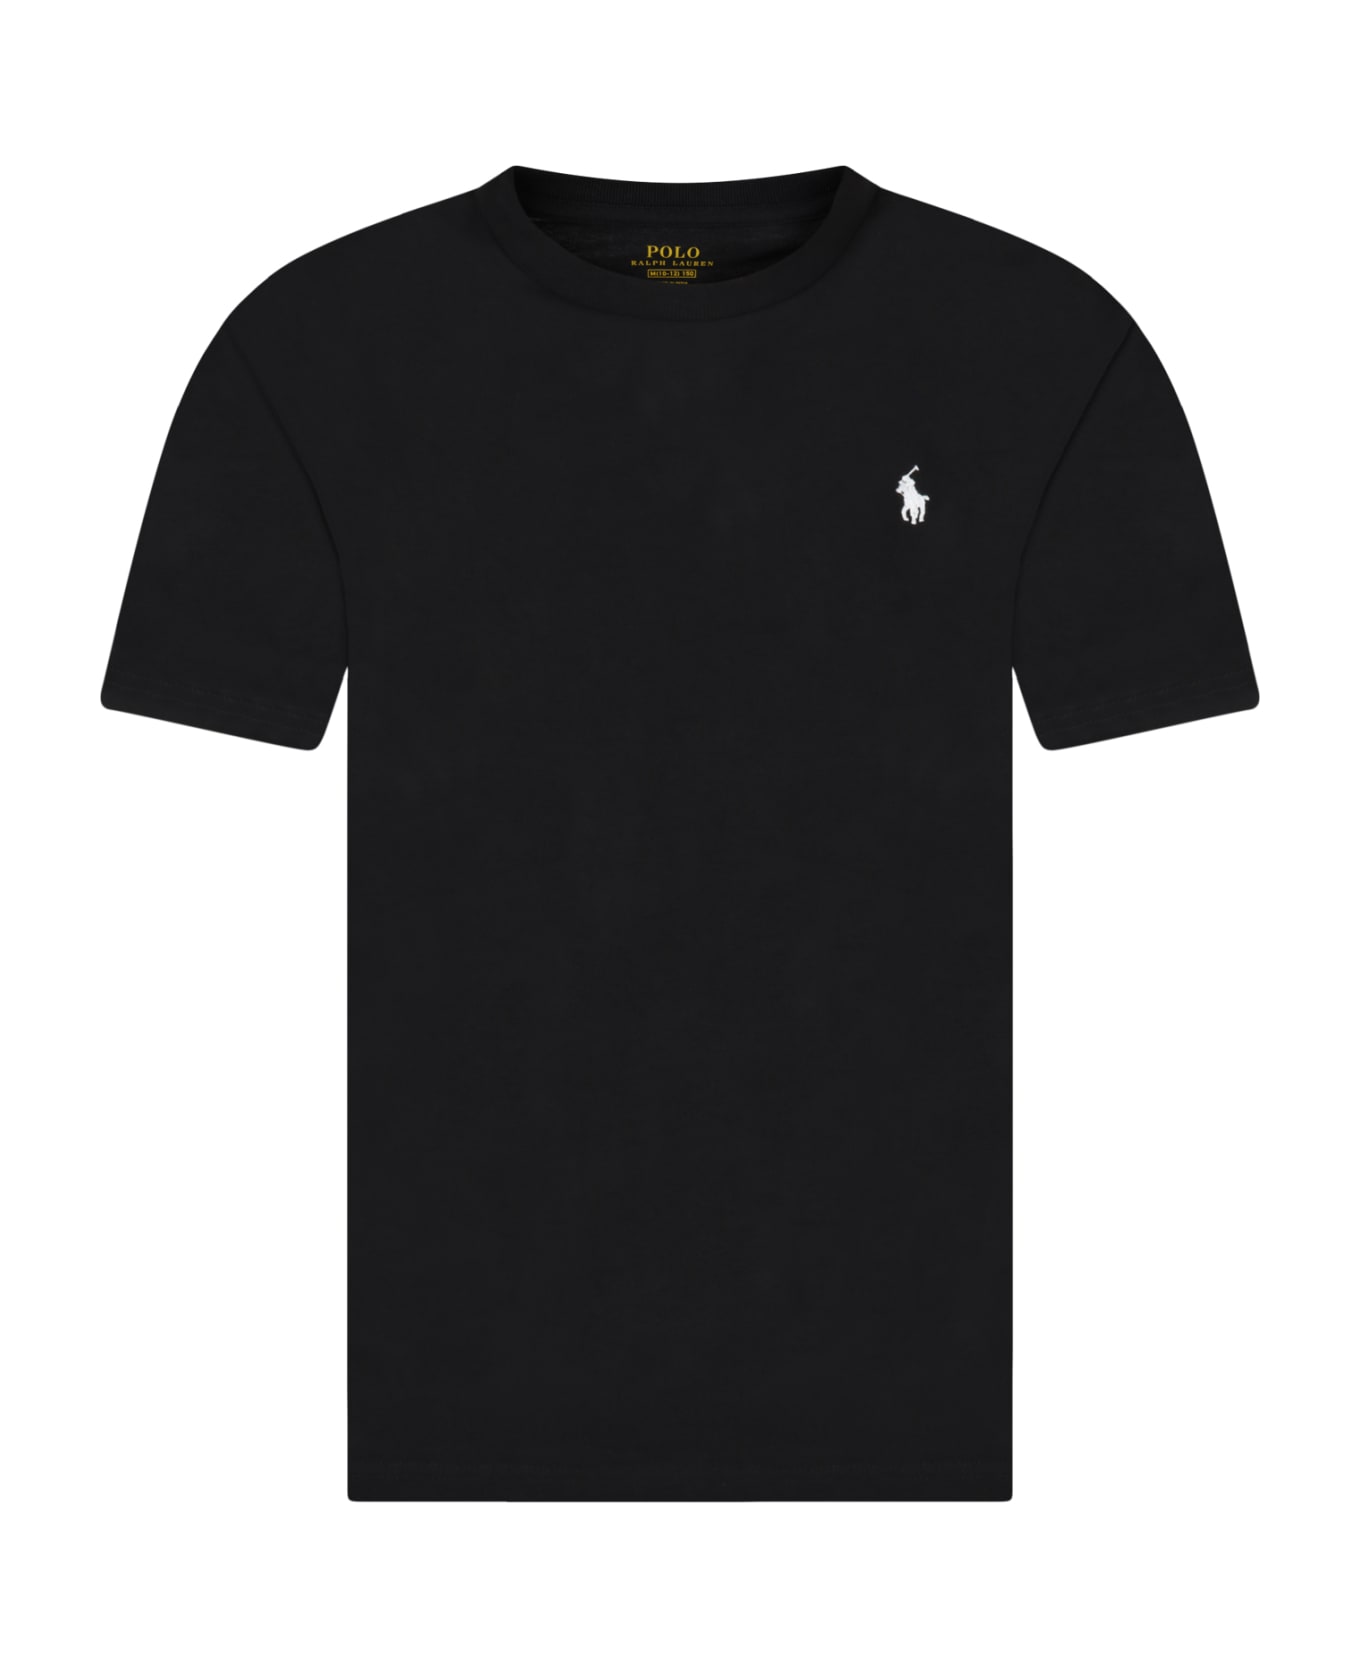 Ralph Lauren Black T-shirt For Boy With Pony Logo - Black